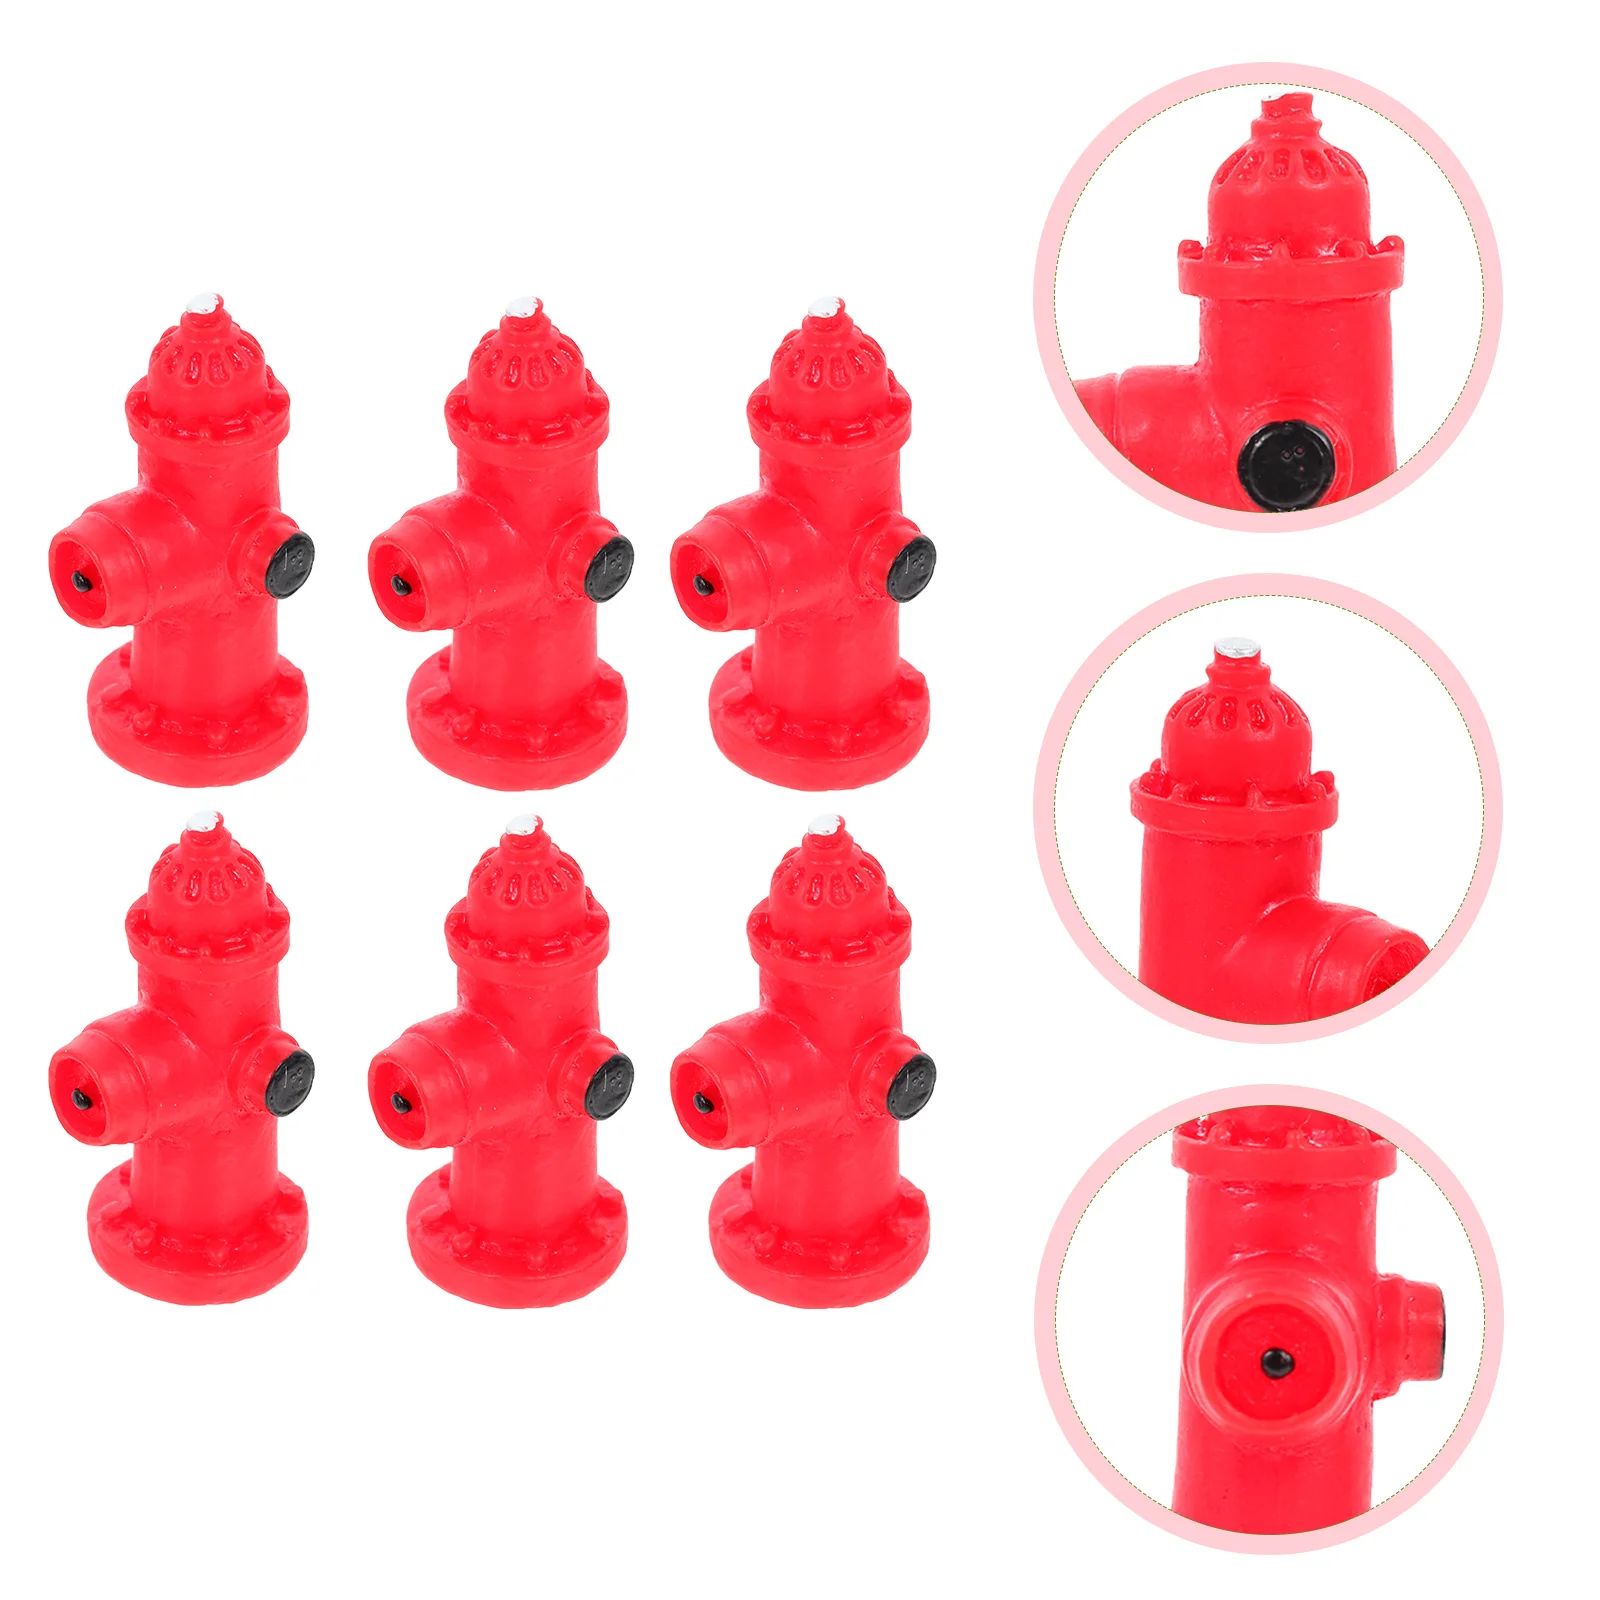 

6 Pcs Fire Hydrant Desktop Ornament Small Decor Resin Craft Puzzle Toys Sand Table Adornment Child Glass